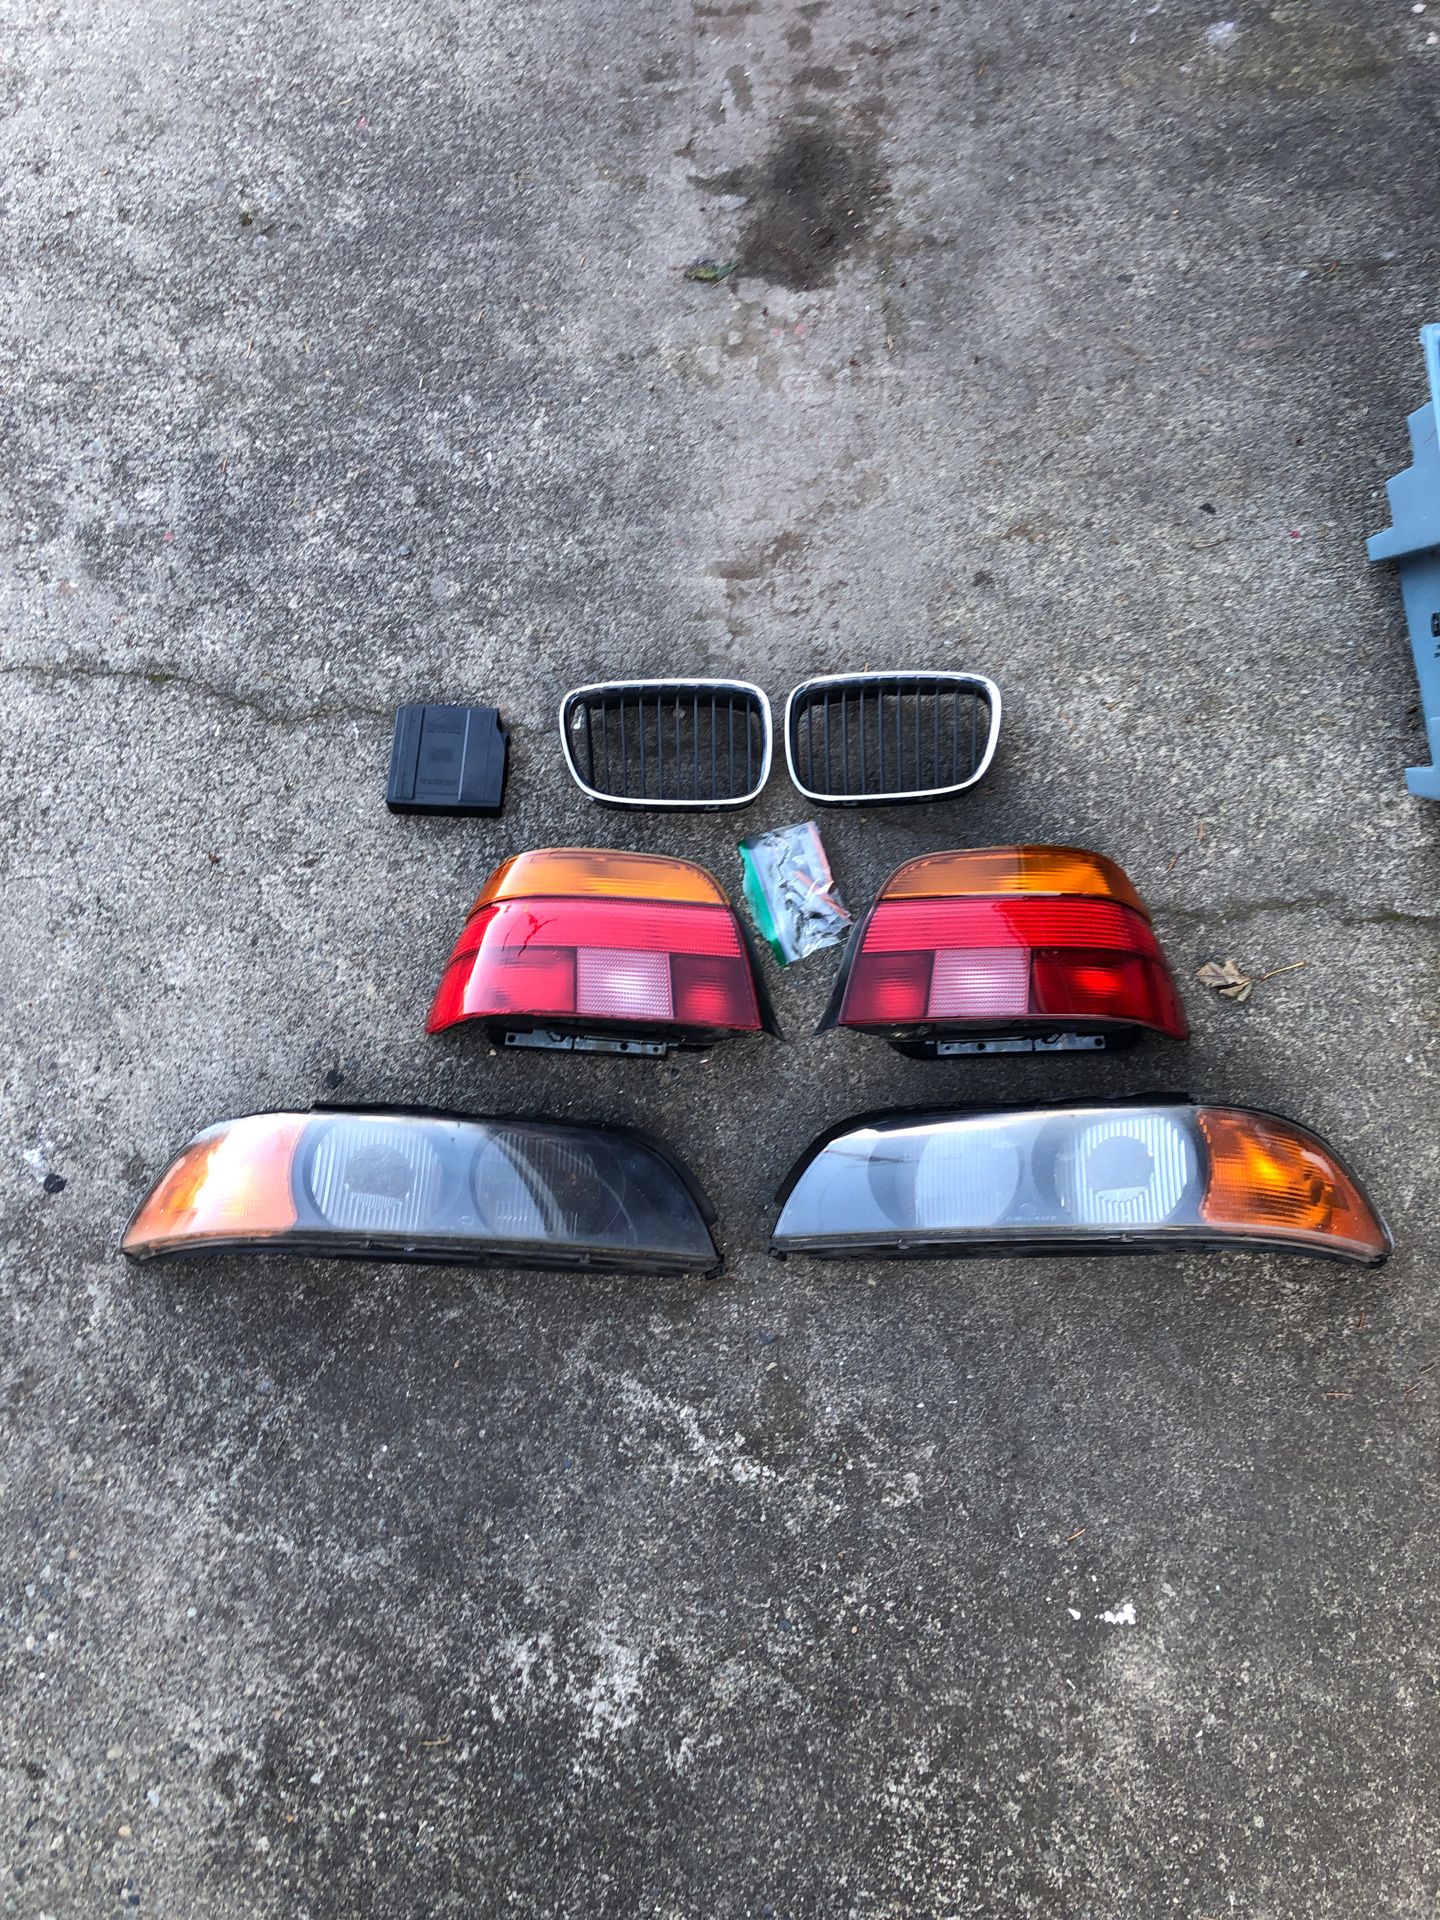 Random BMW E39 5 series parts